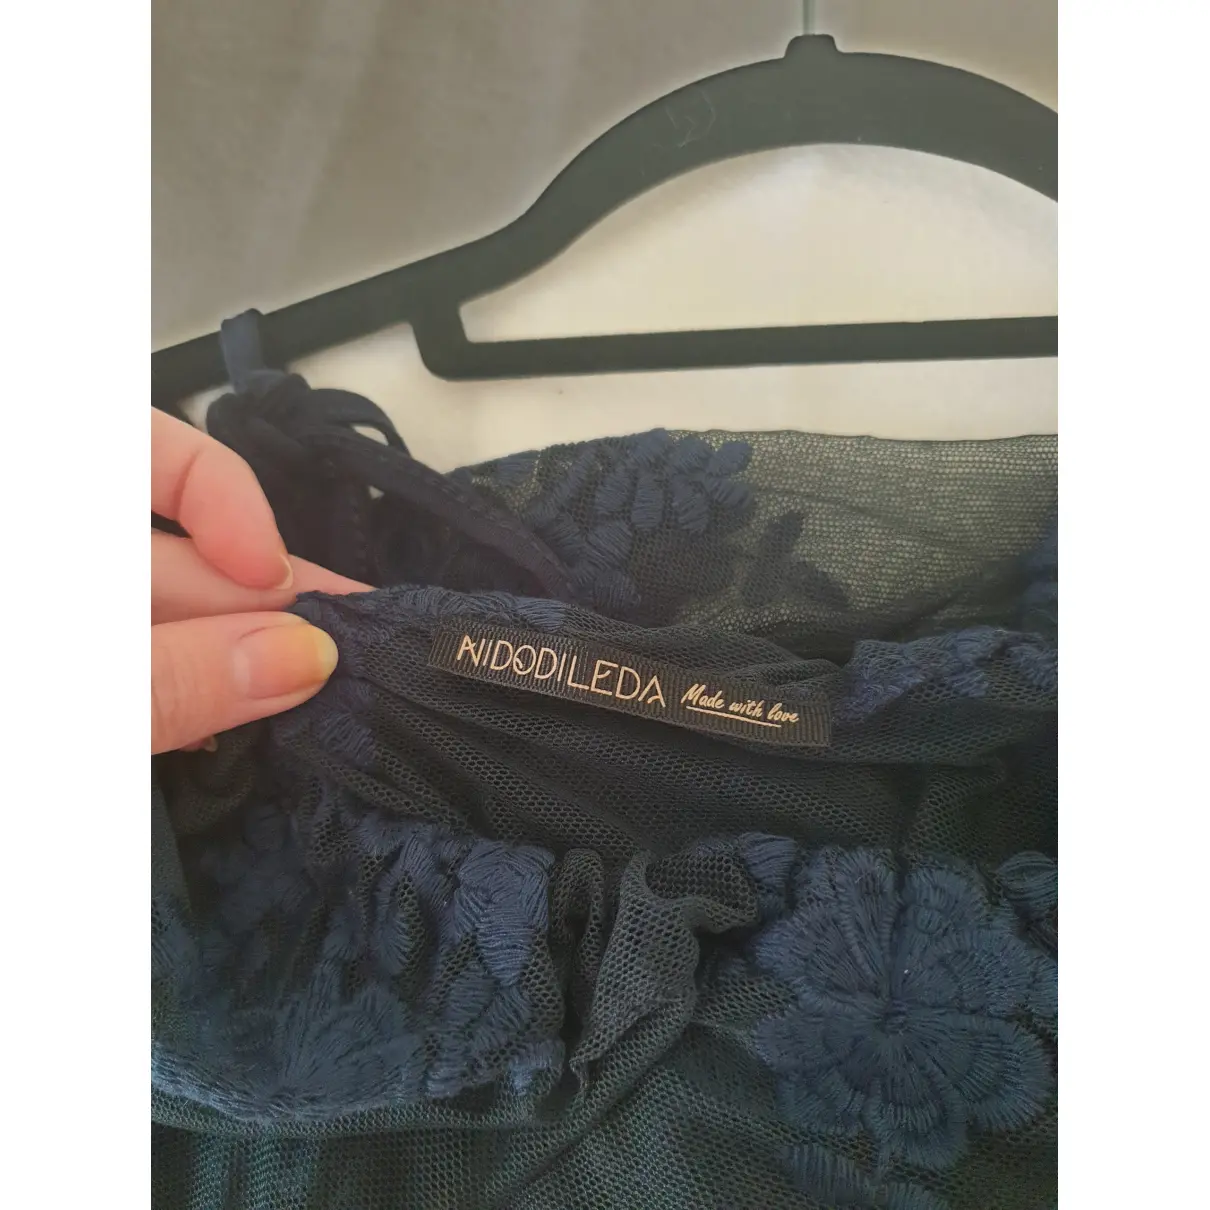 Buy NIDODILEDA Lace maxi dress online